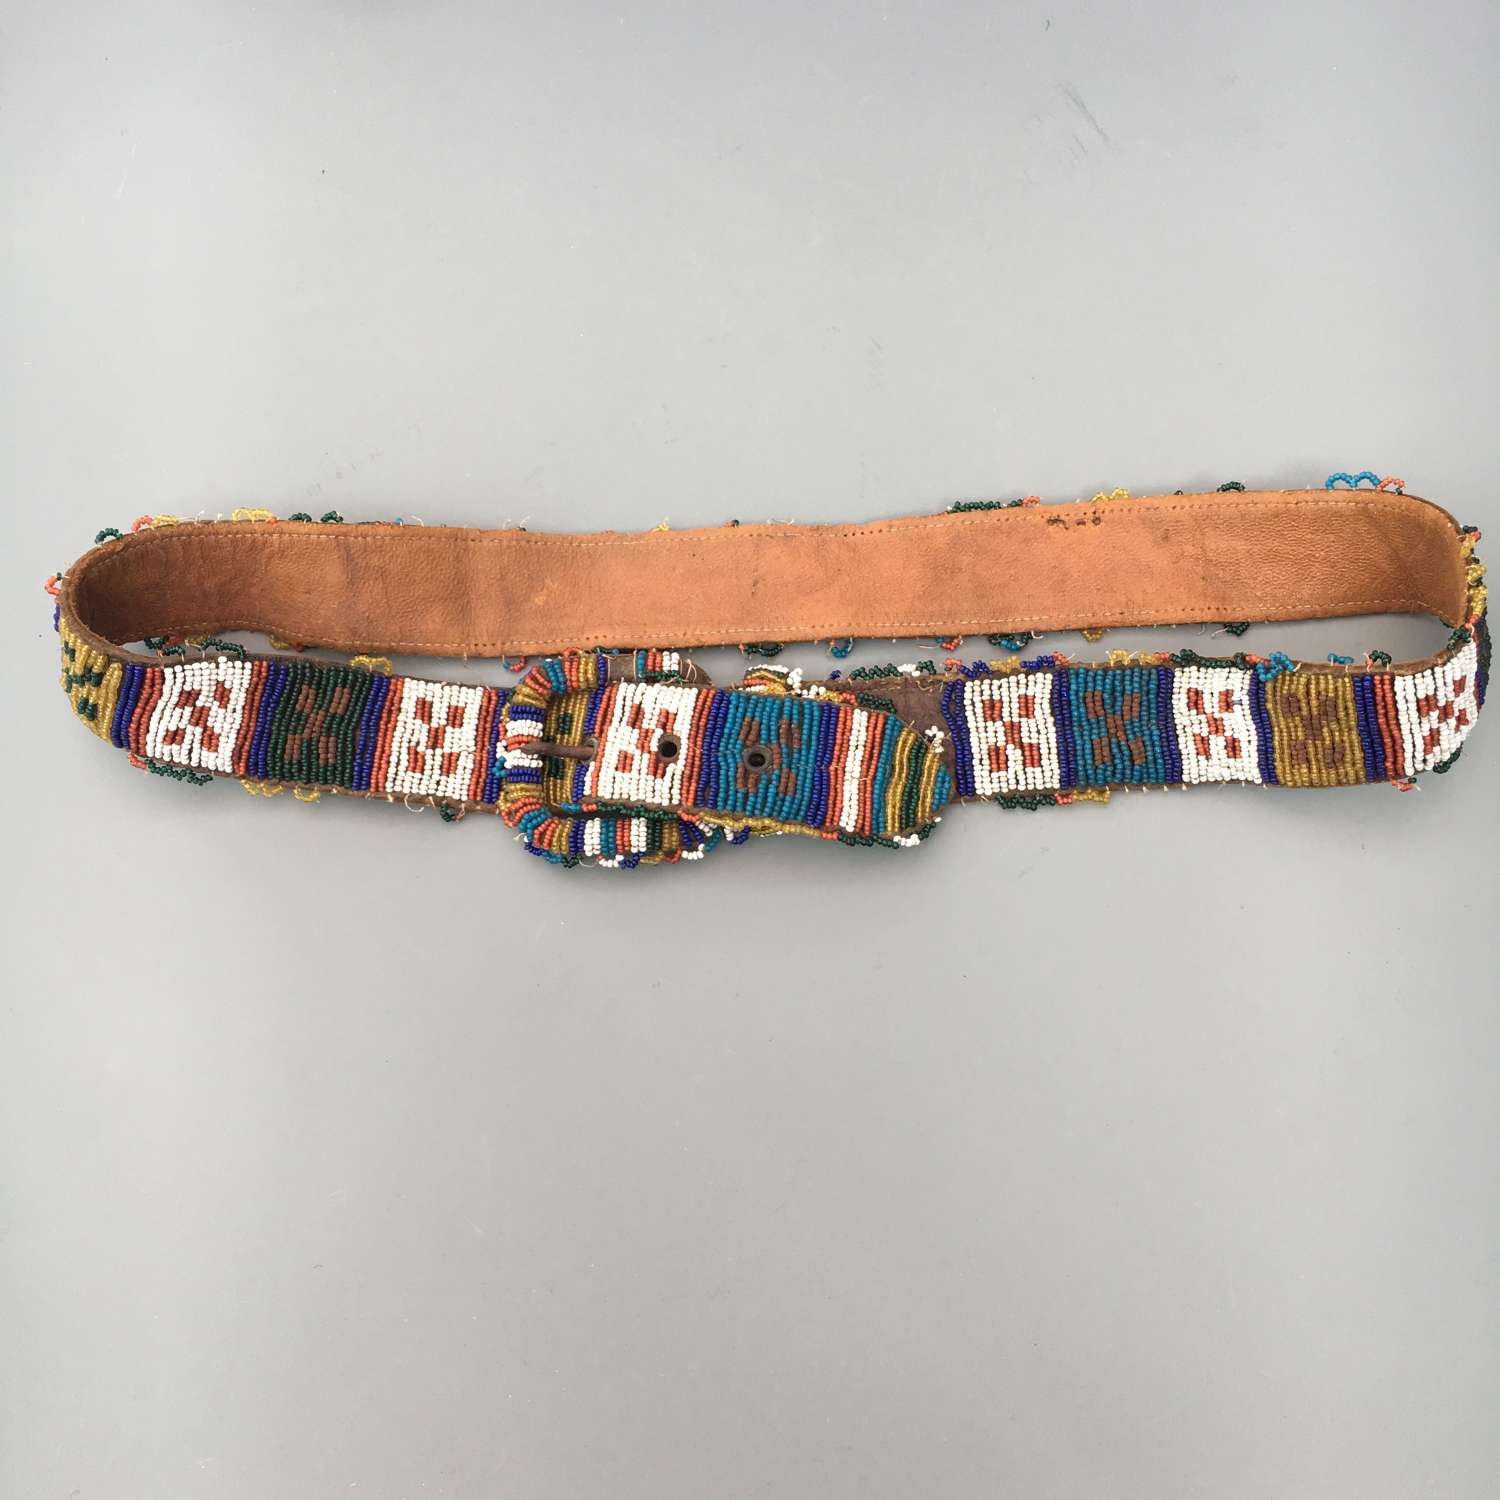 Native American Indian bead work belt